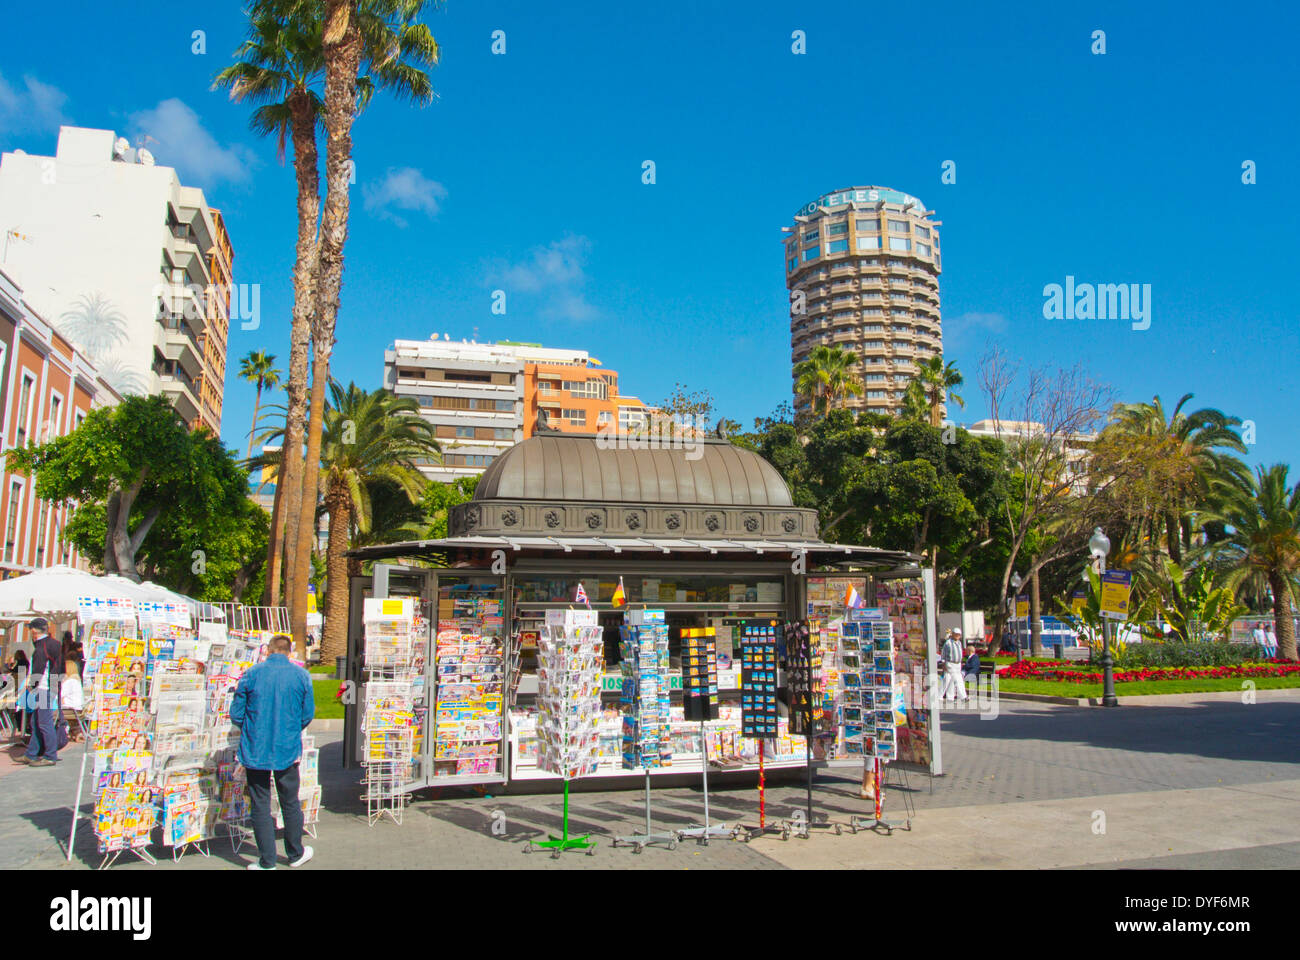 Newsagents kiosk, Parque Santa Catalina park square, Las Palmas de Gran Canaria, Canary Islands, Spain, Europe Stock Photo